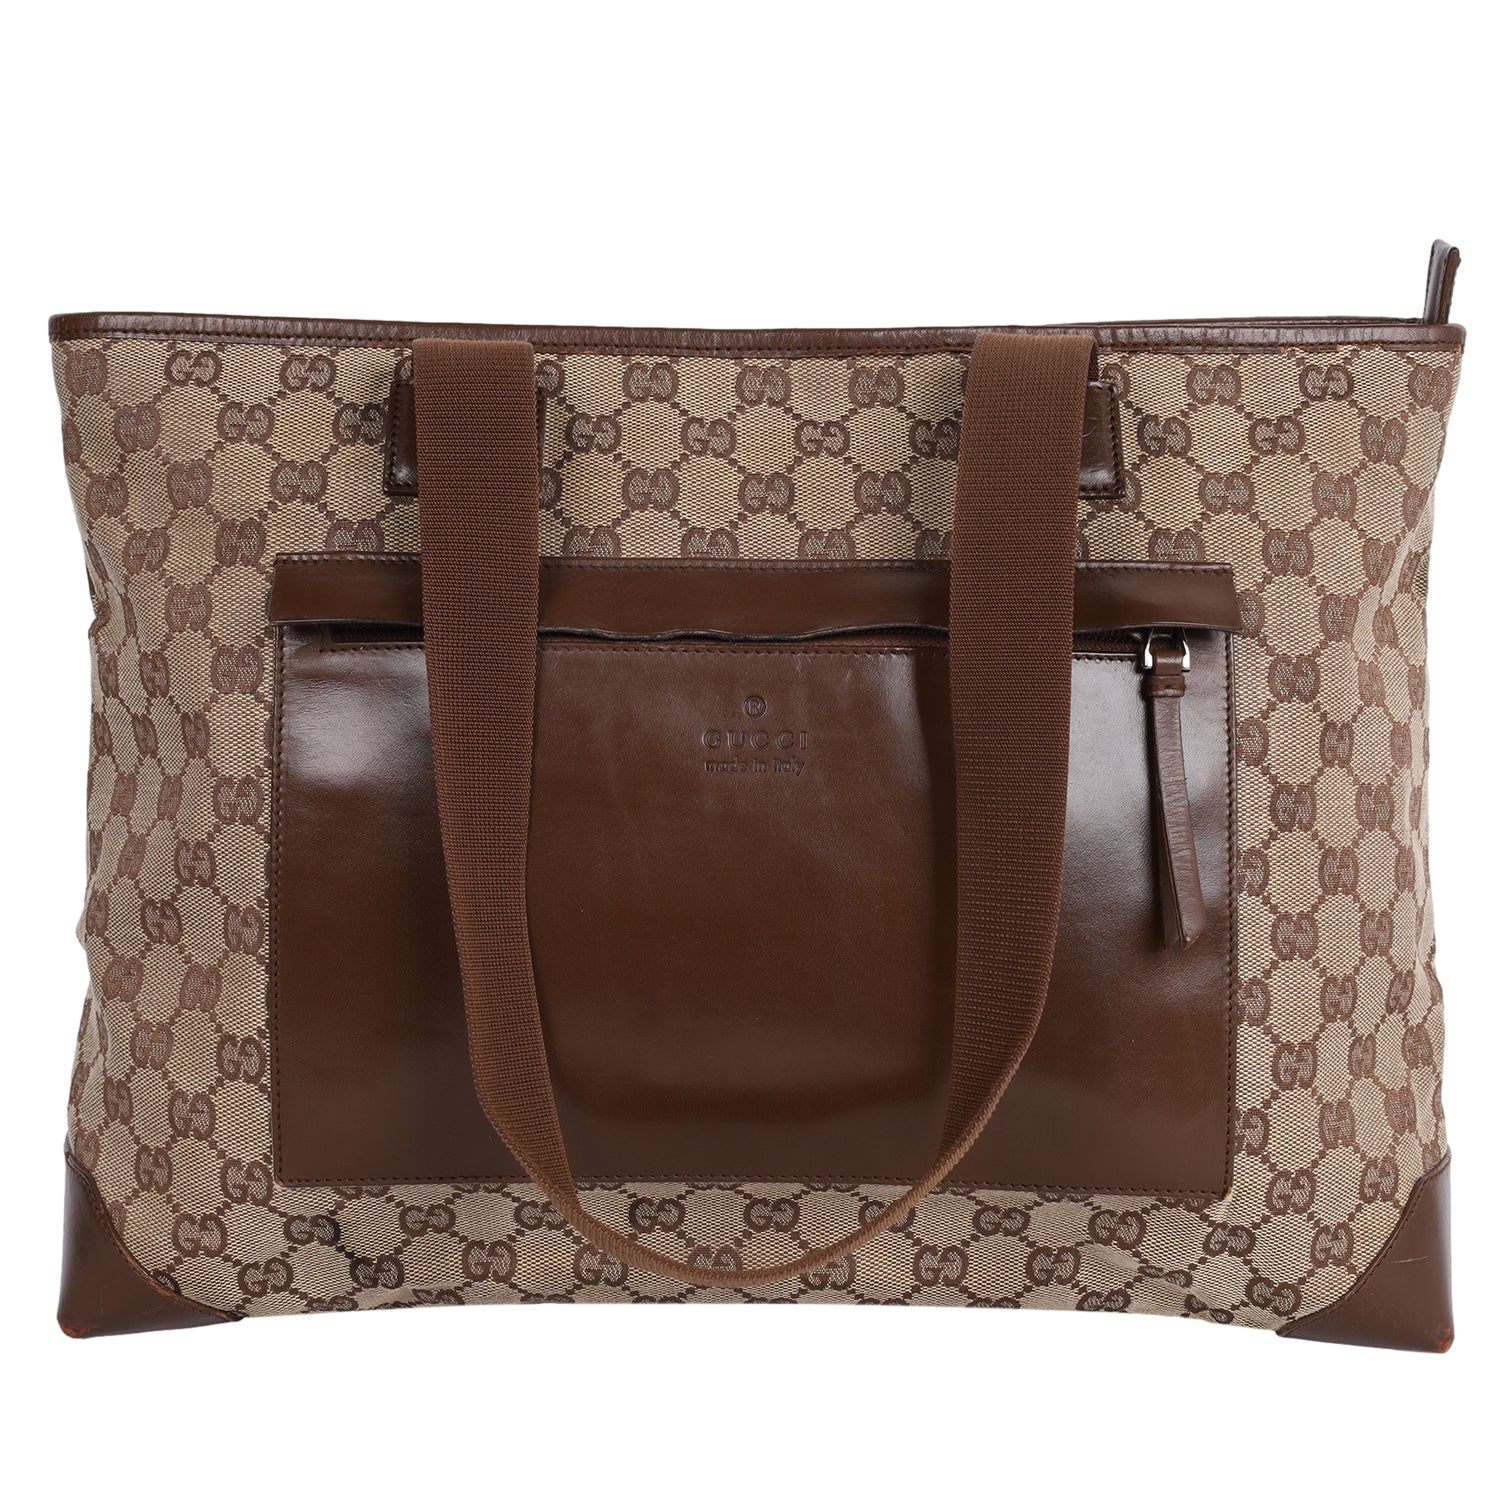 Gucci Tote bag (Authentic)